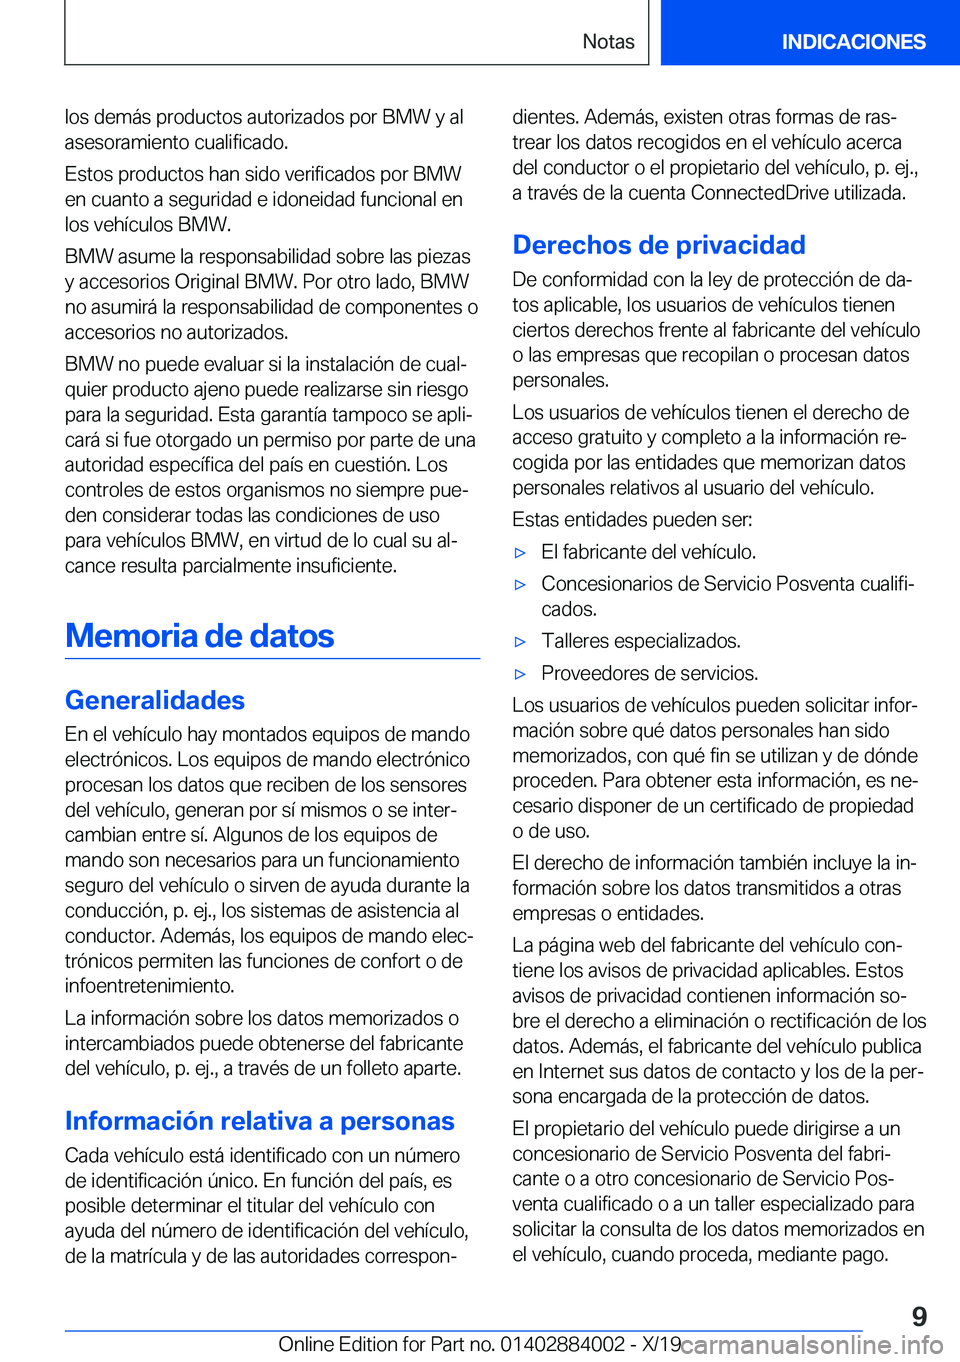 BMW X7 2020  Manuales de Empleo (in Spanish) �l�o�s��d�e�m�